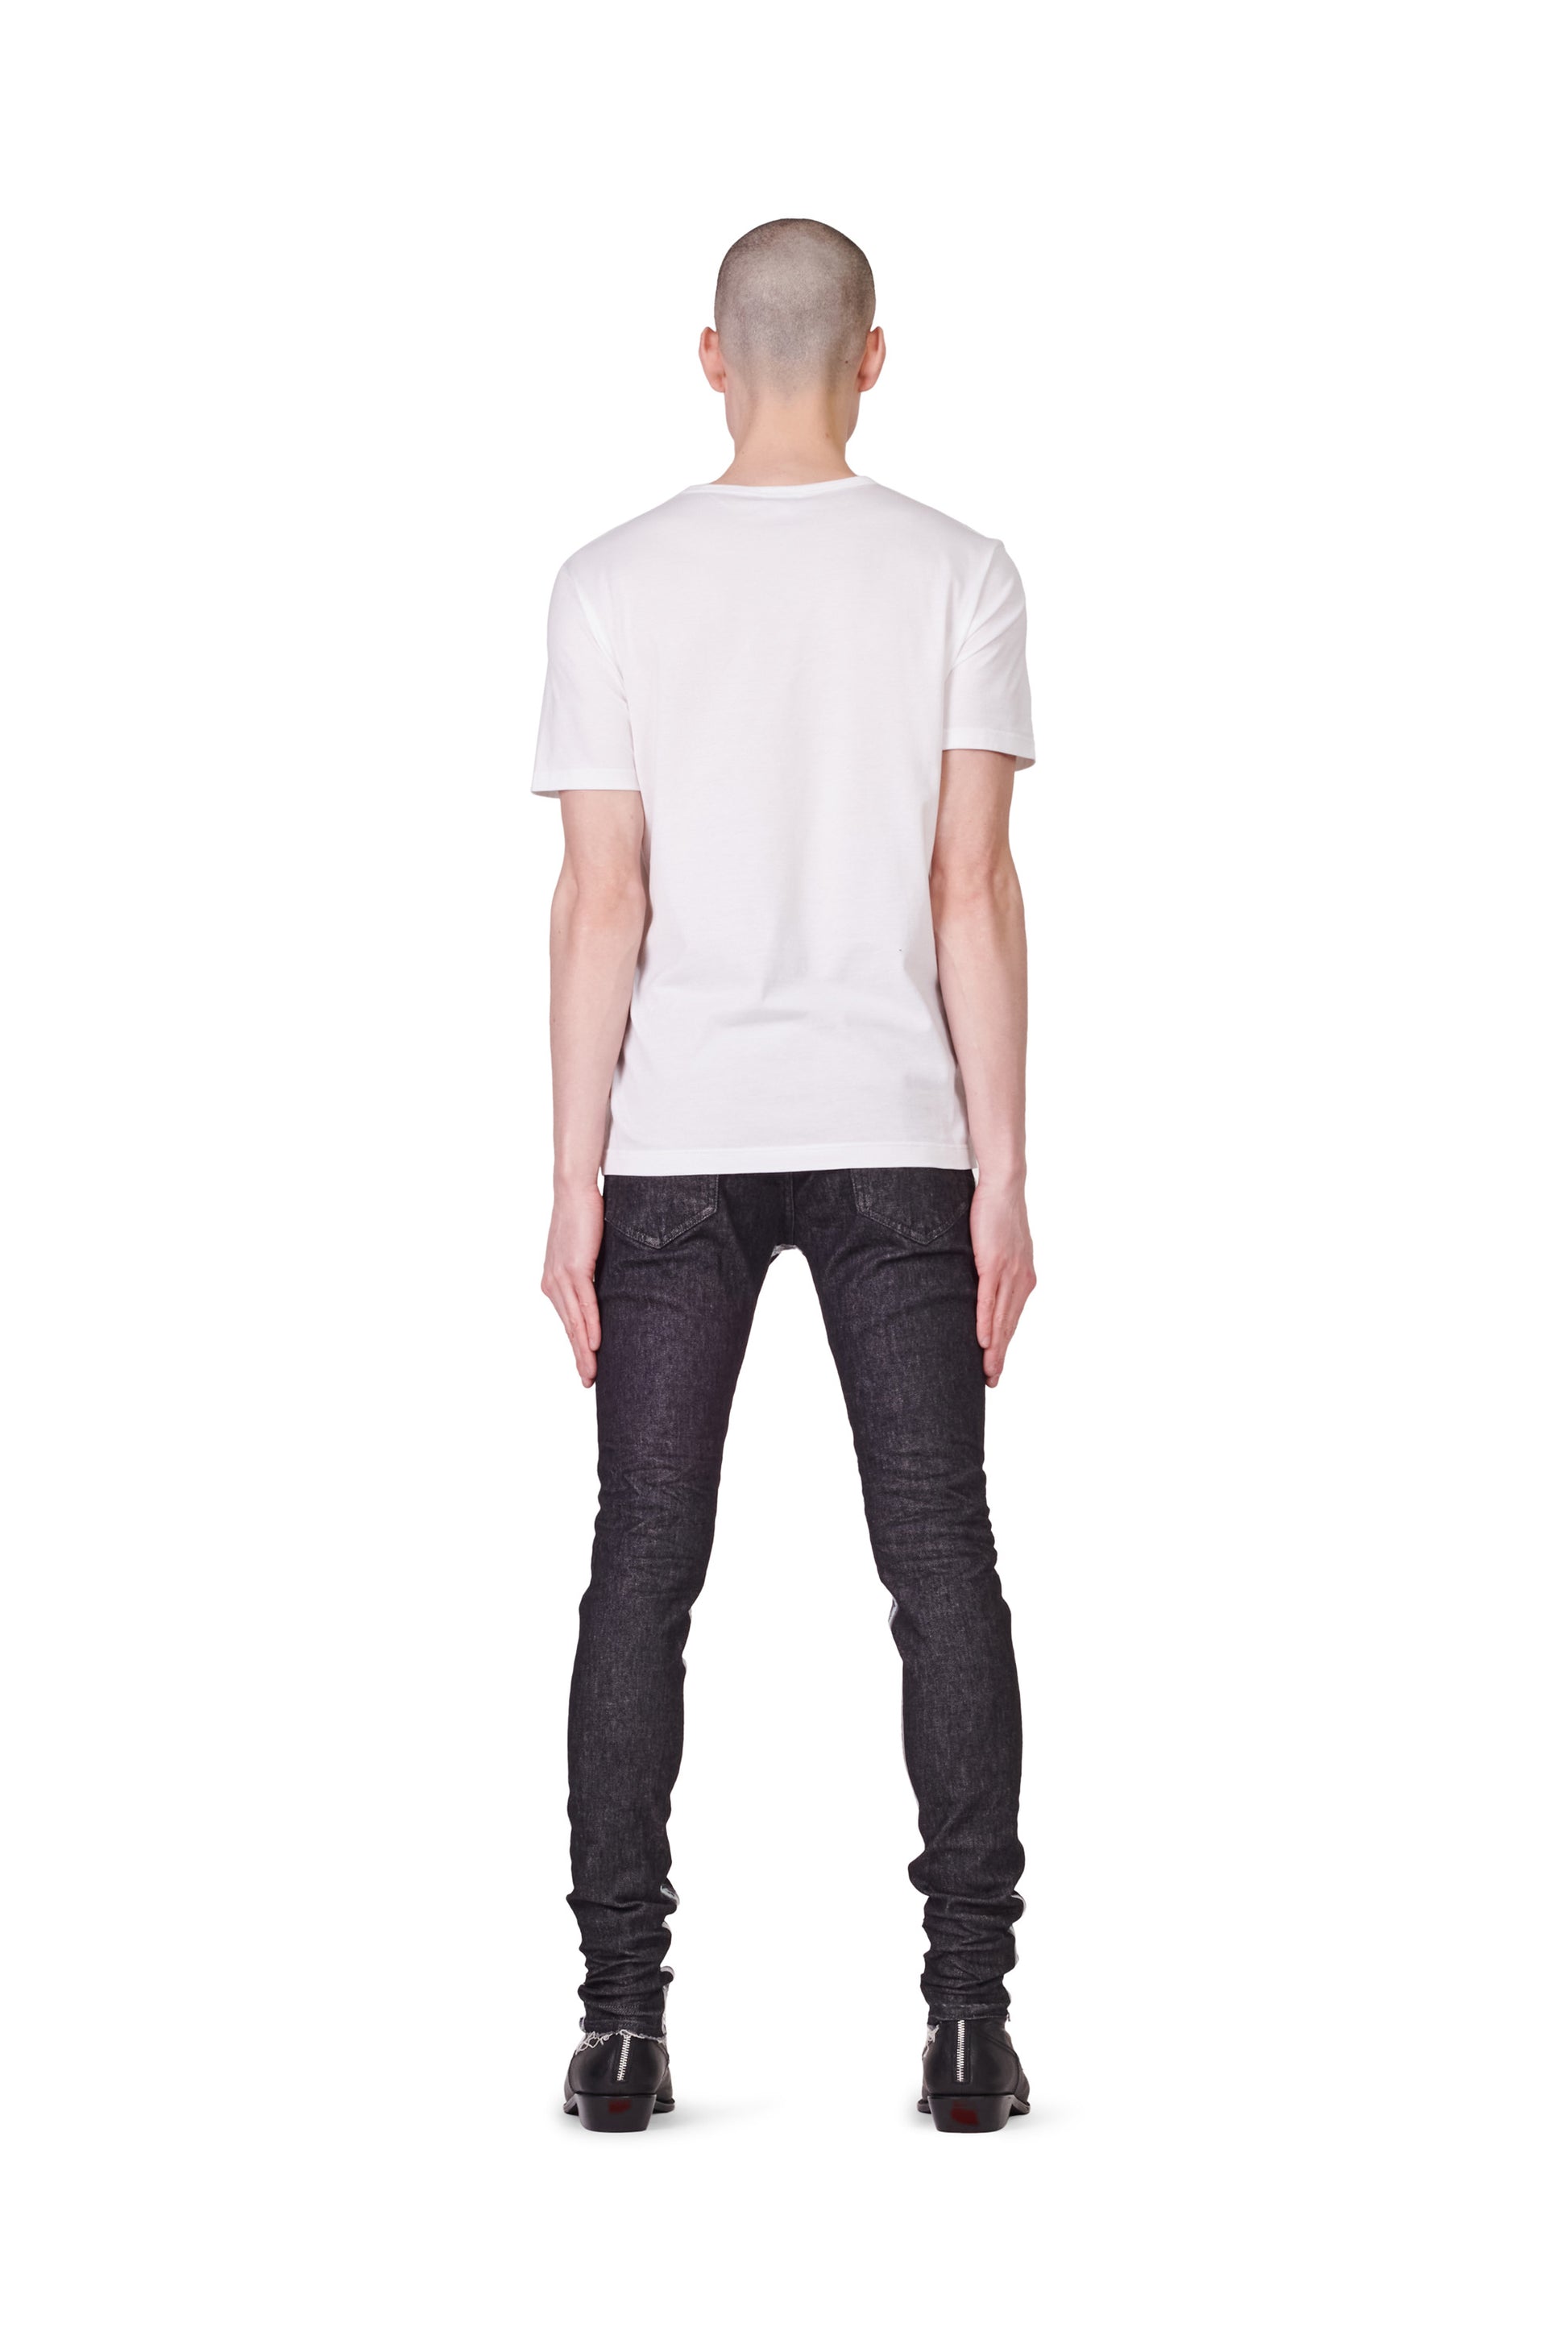 PURPLE BRAND - Men's Low Rise Skinny Jean - Style No. P001 - Raw Indigo Black Framis Fray - Model Back Pose